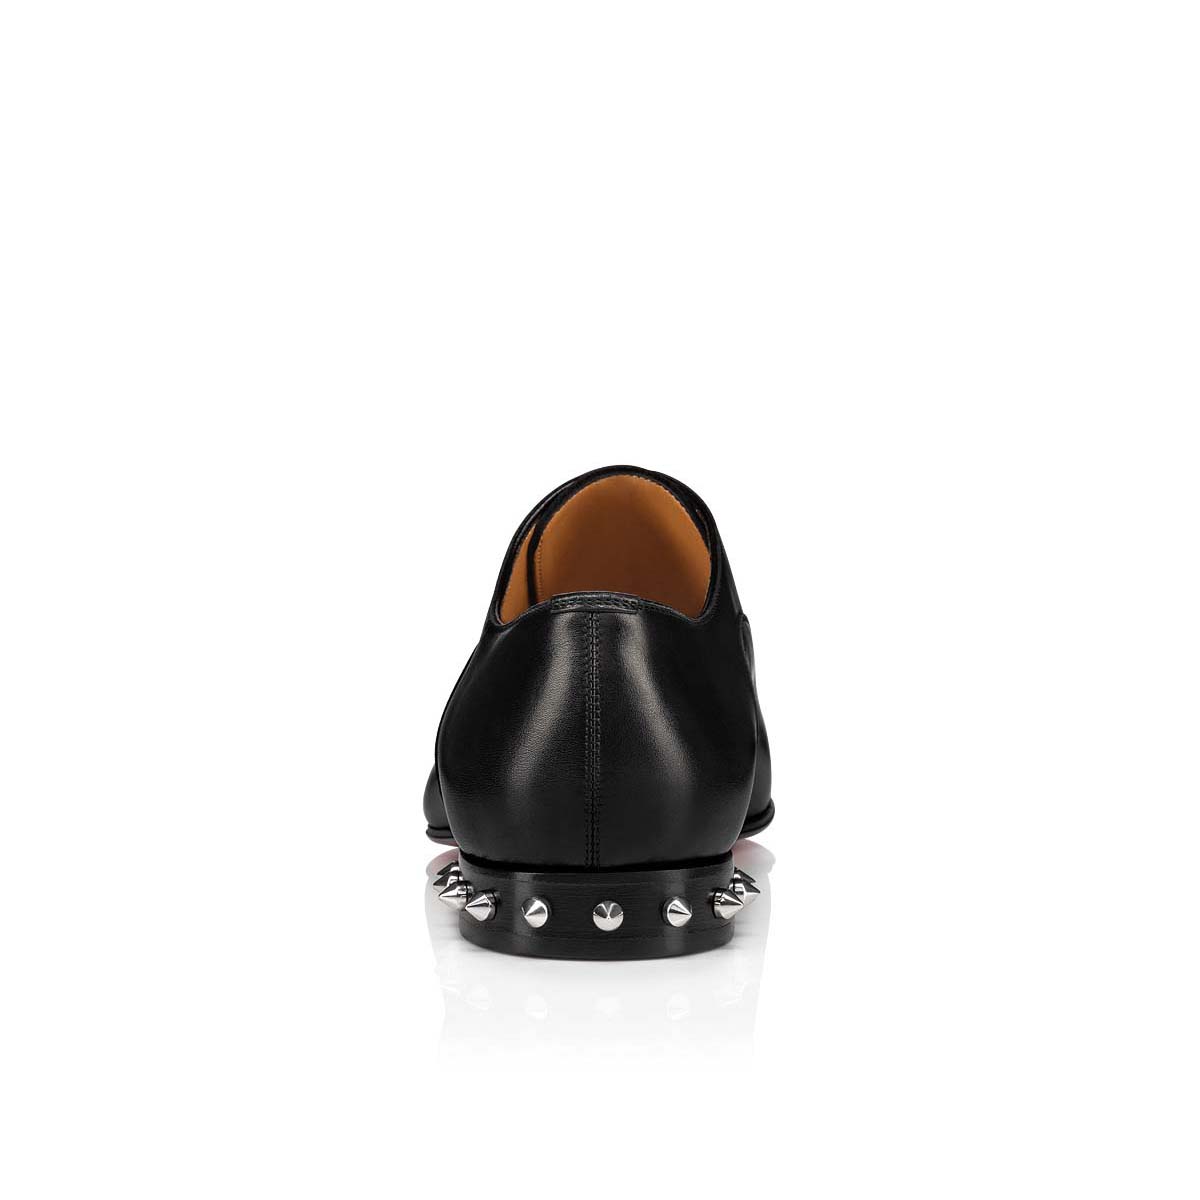 Greggo Flat Louboutin's shoes. #RedBottoms #HighFashion #FashionKilla  #FashionIcon #ForHim #Haberdashion #FashionT…